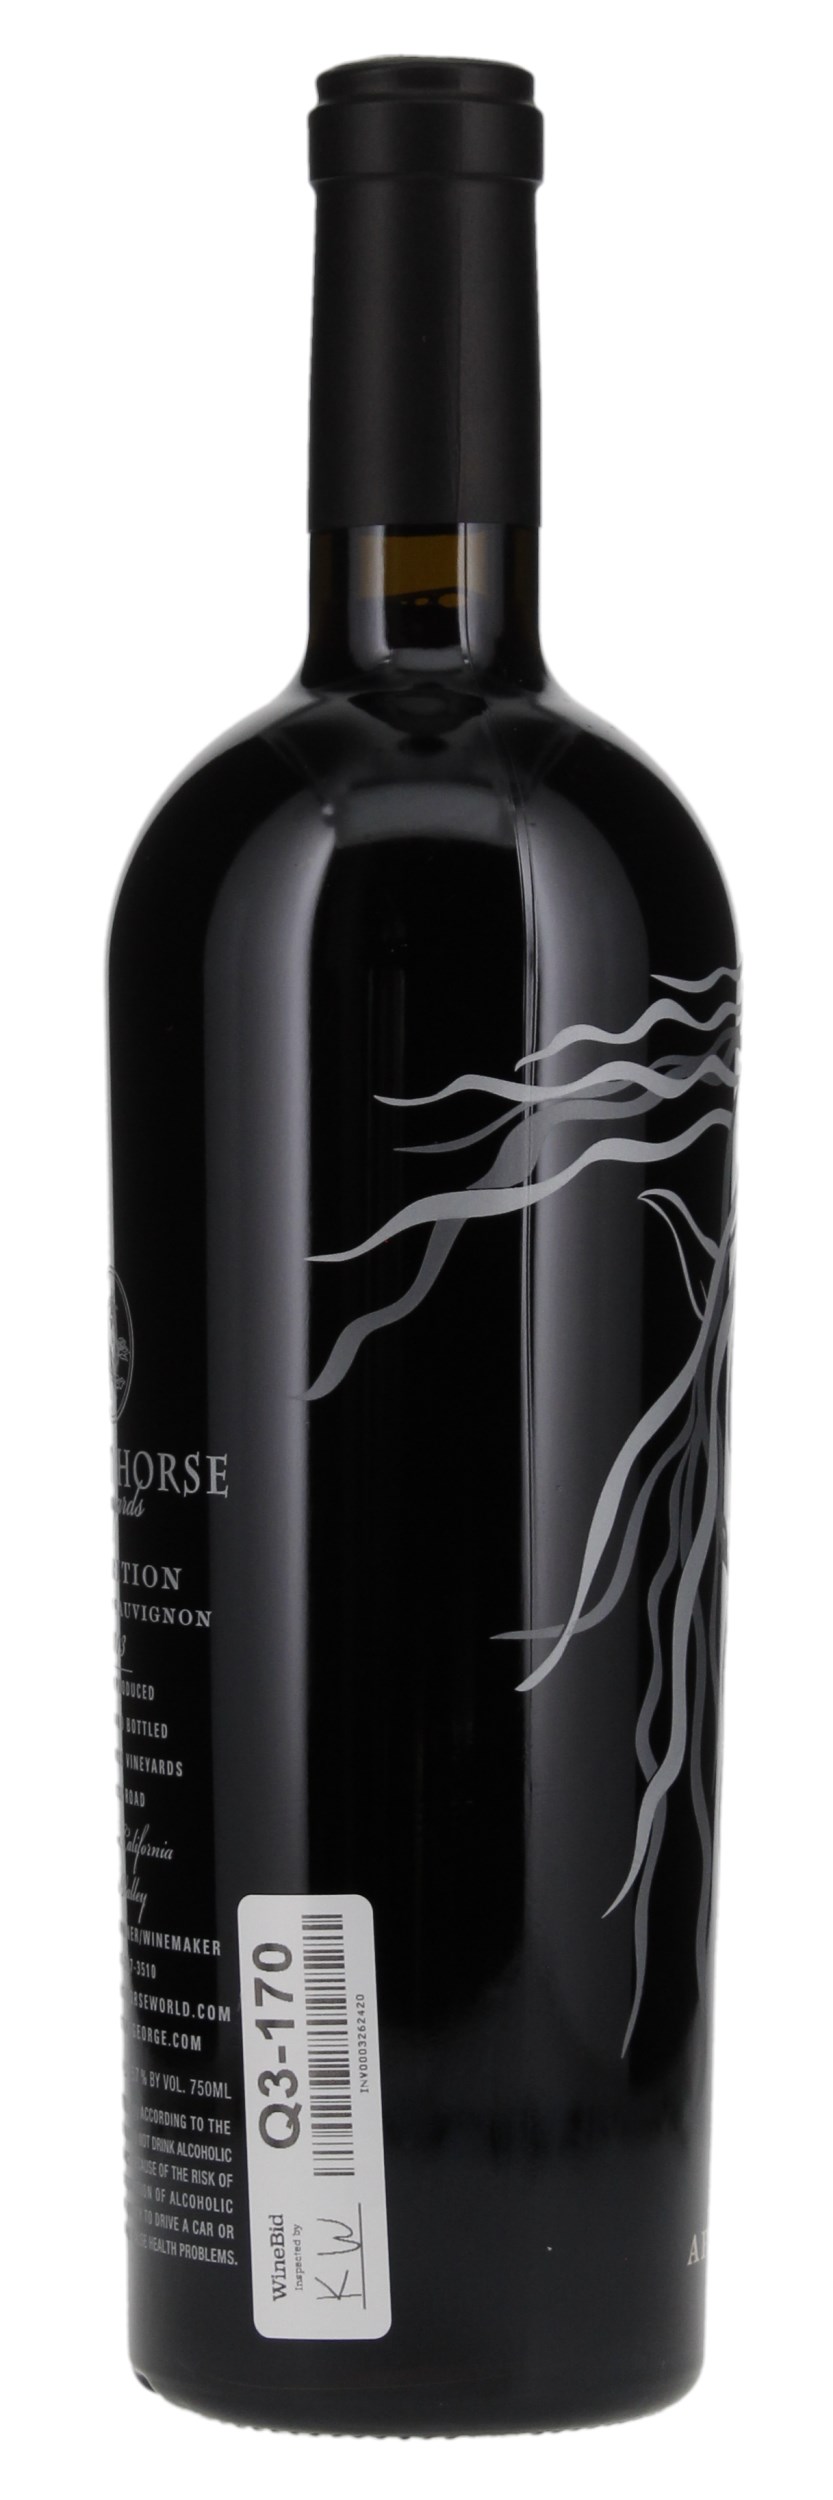 2013 Ghost Horse Vineyard Apparition Cabernet Sauvignon, 750ml